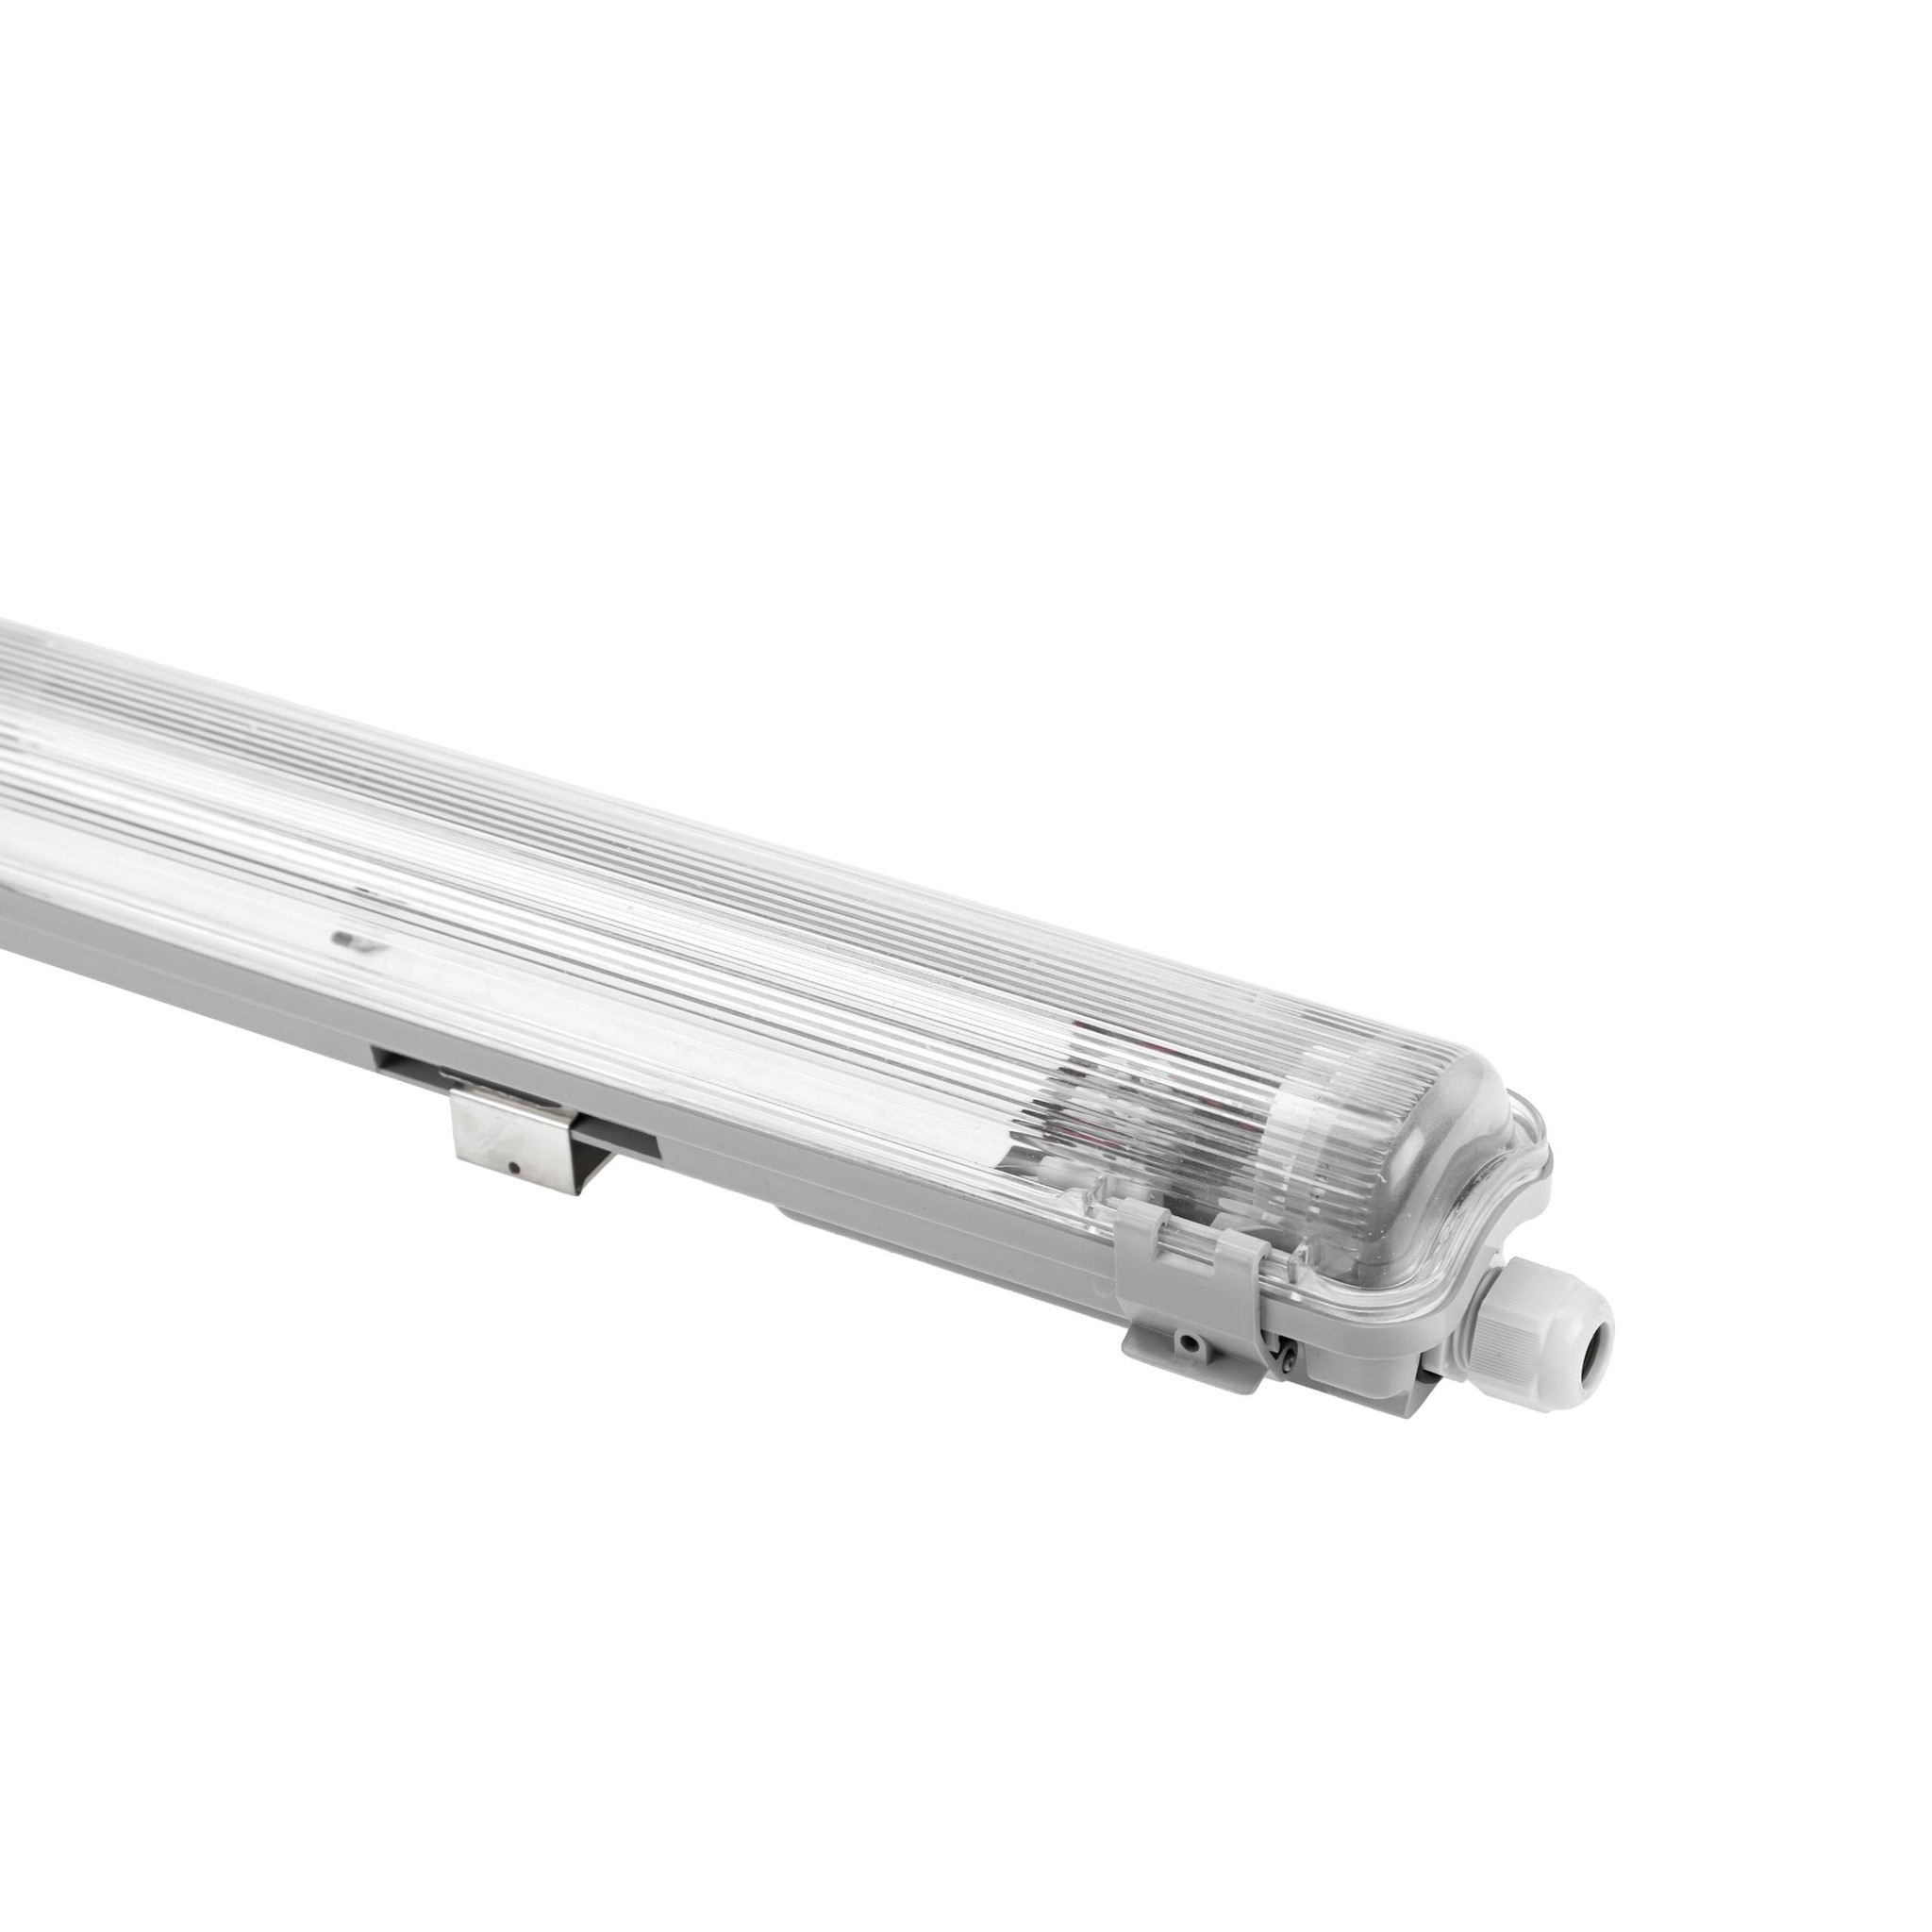 TL buis armatuur 60cm - Waterdicht IP65 - voor 1 LED buis - Ledlichtdiscounter.nl